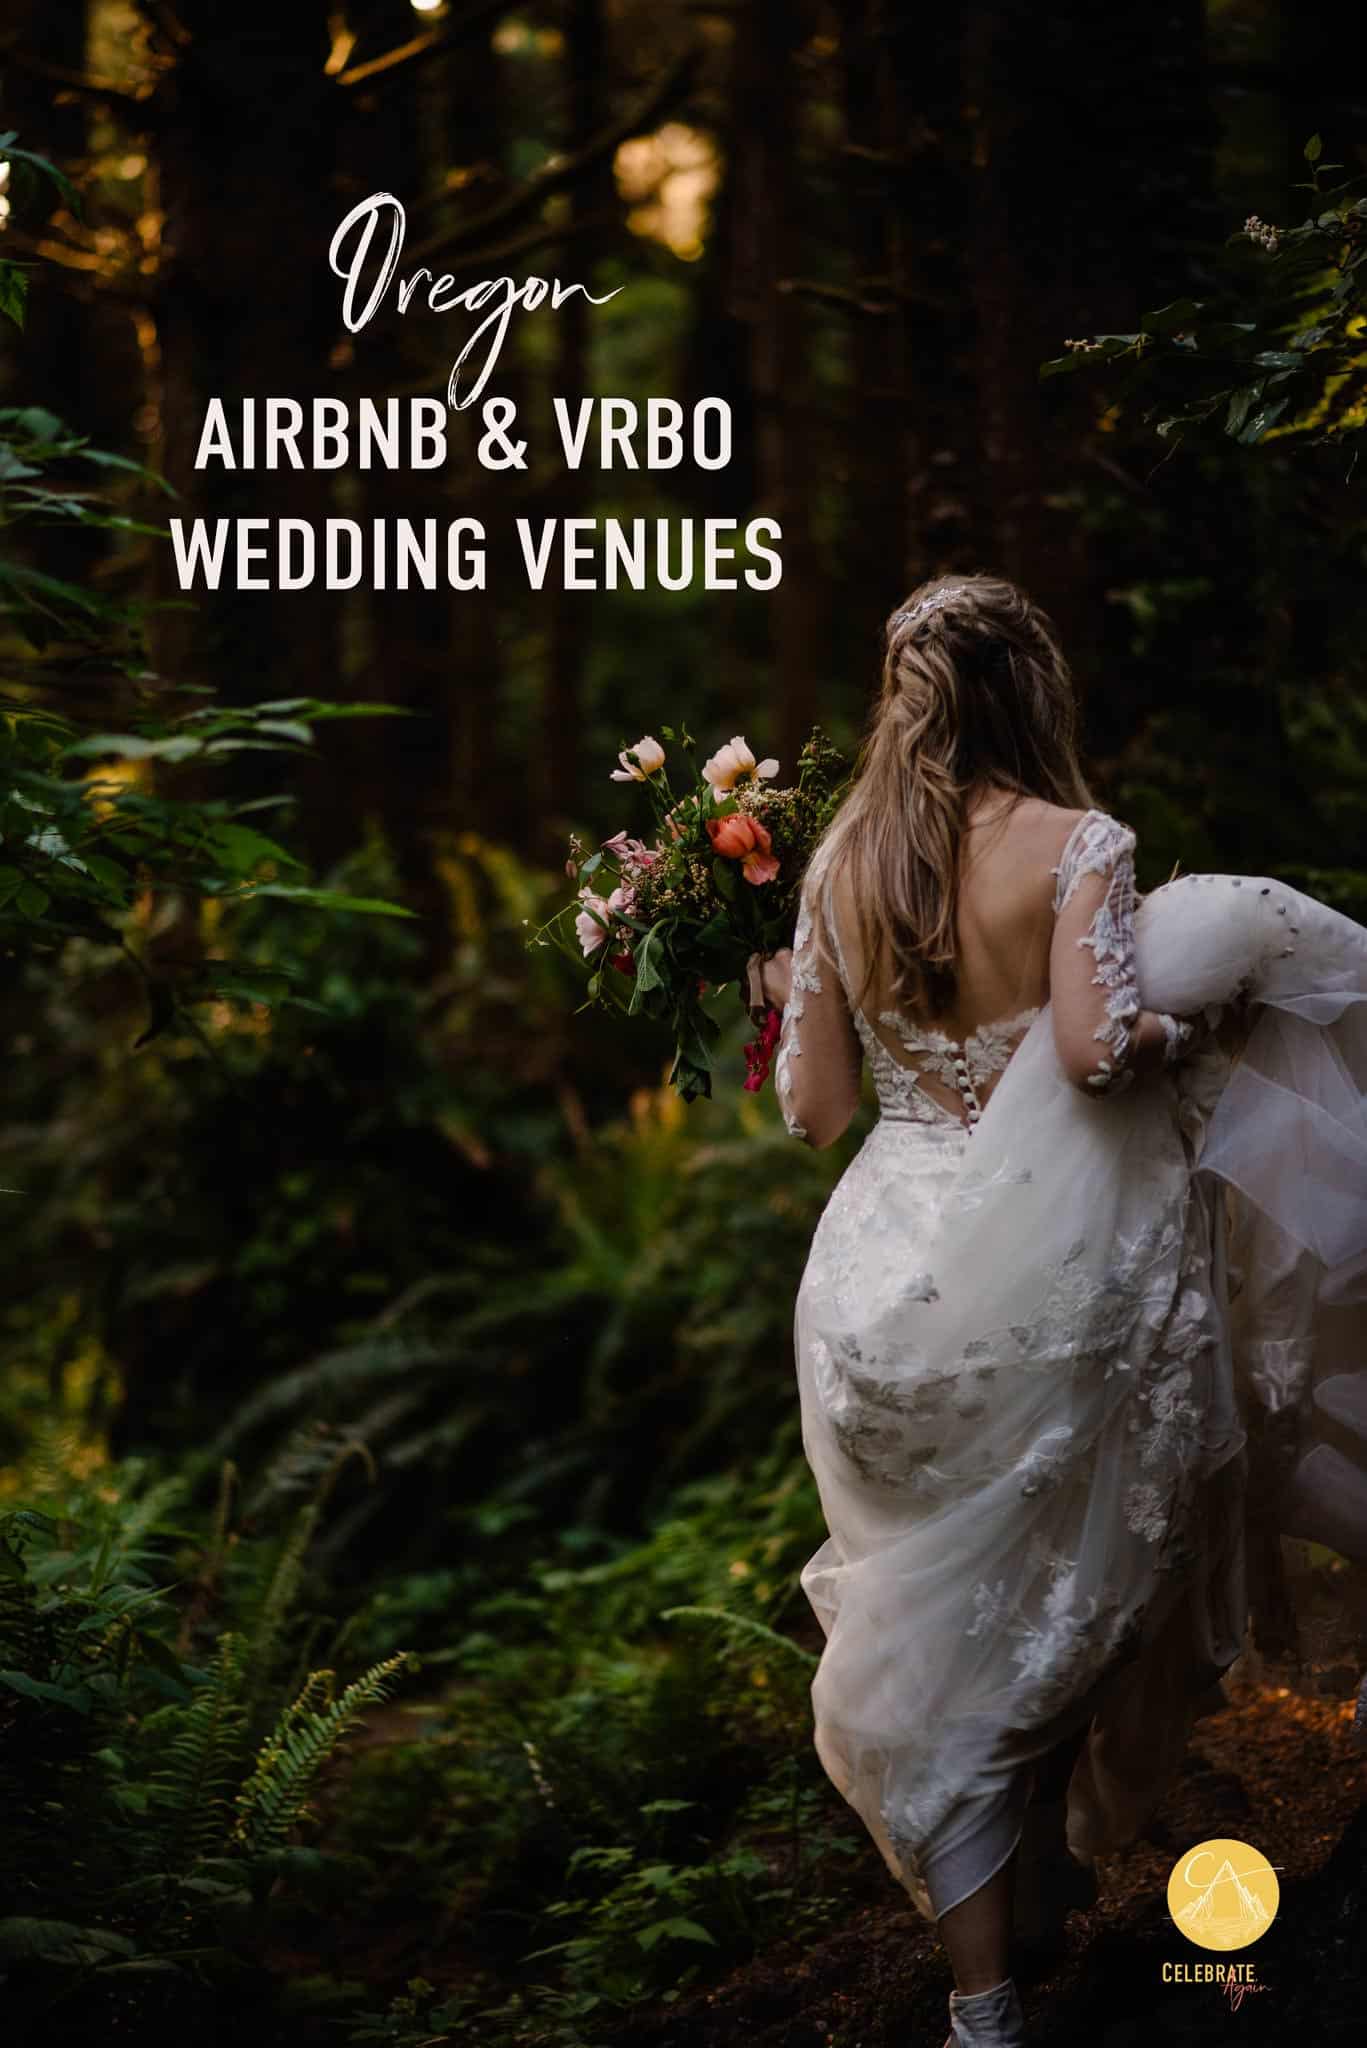 "oregon airbnb & vrbo wedding venues" female in woods holding wedding dress